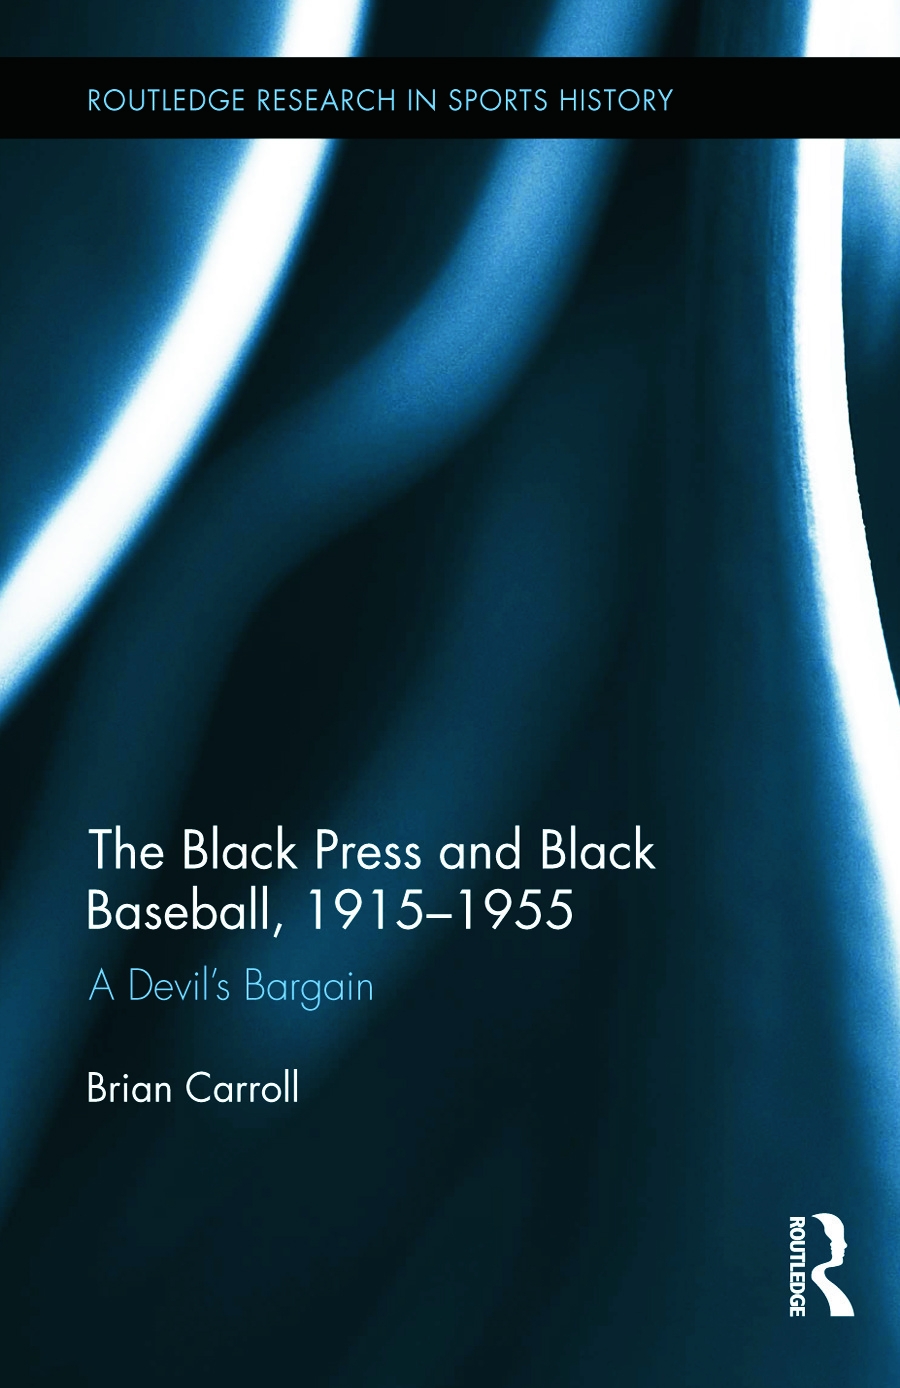 The Black Press and Black Baseball, 1915-1955: A Devil’s Bargain